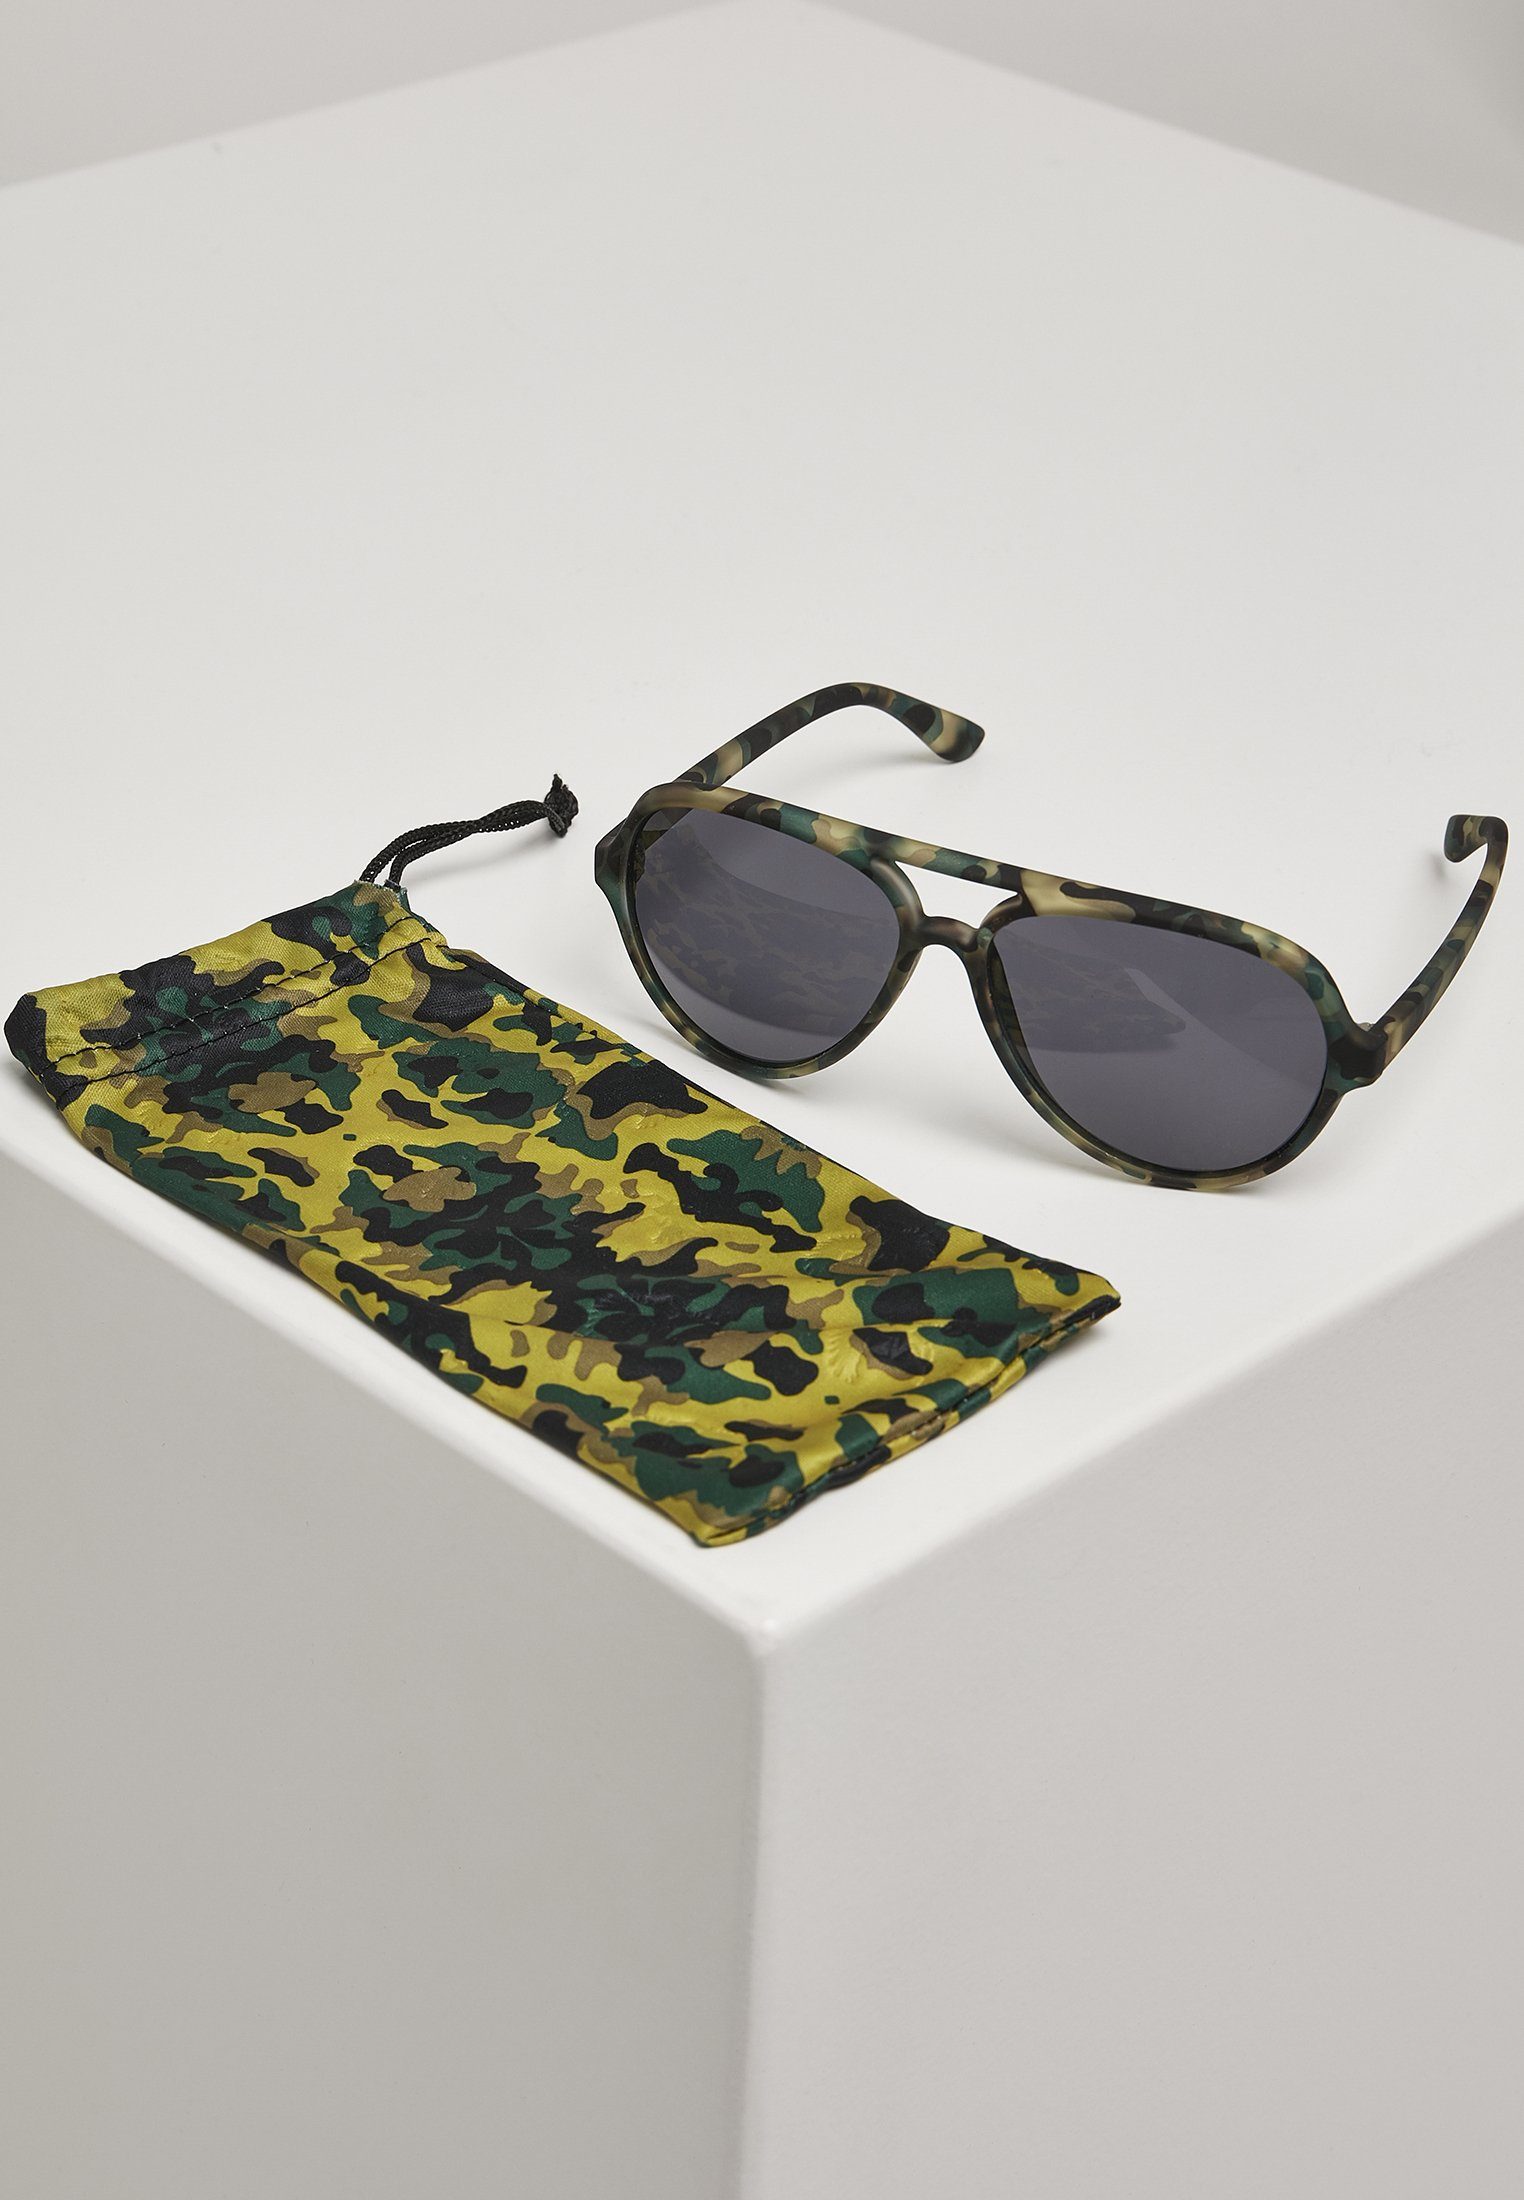 MSTRDS Sonnenbrille Accessoires March Sunglasses camouflage